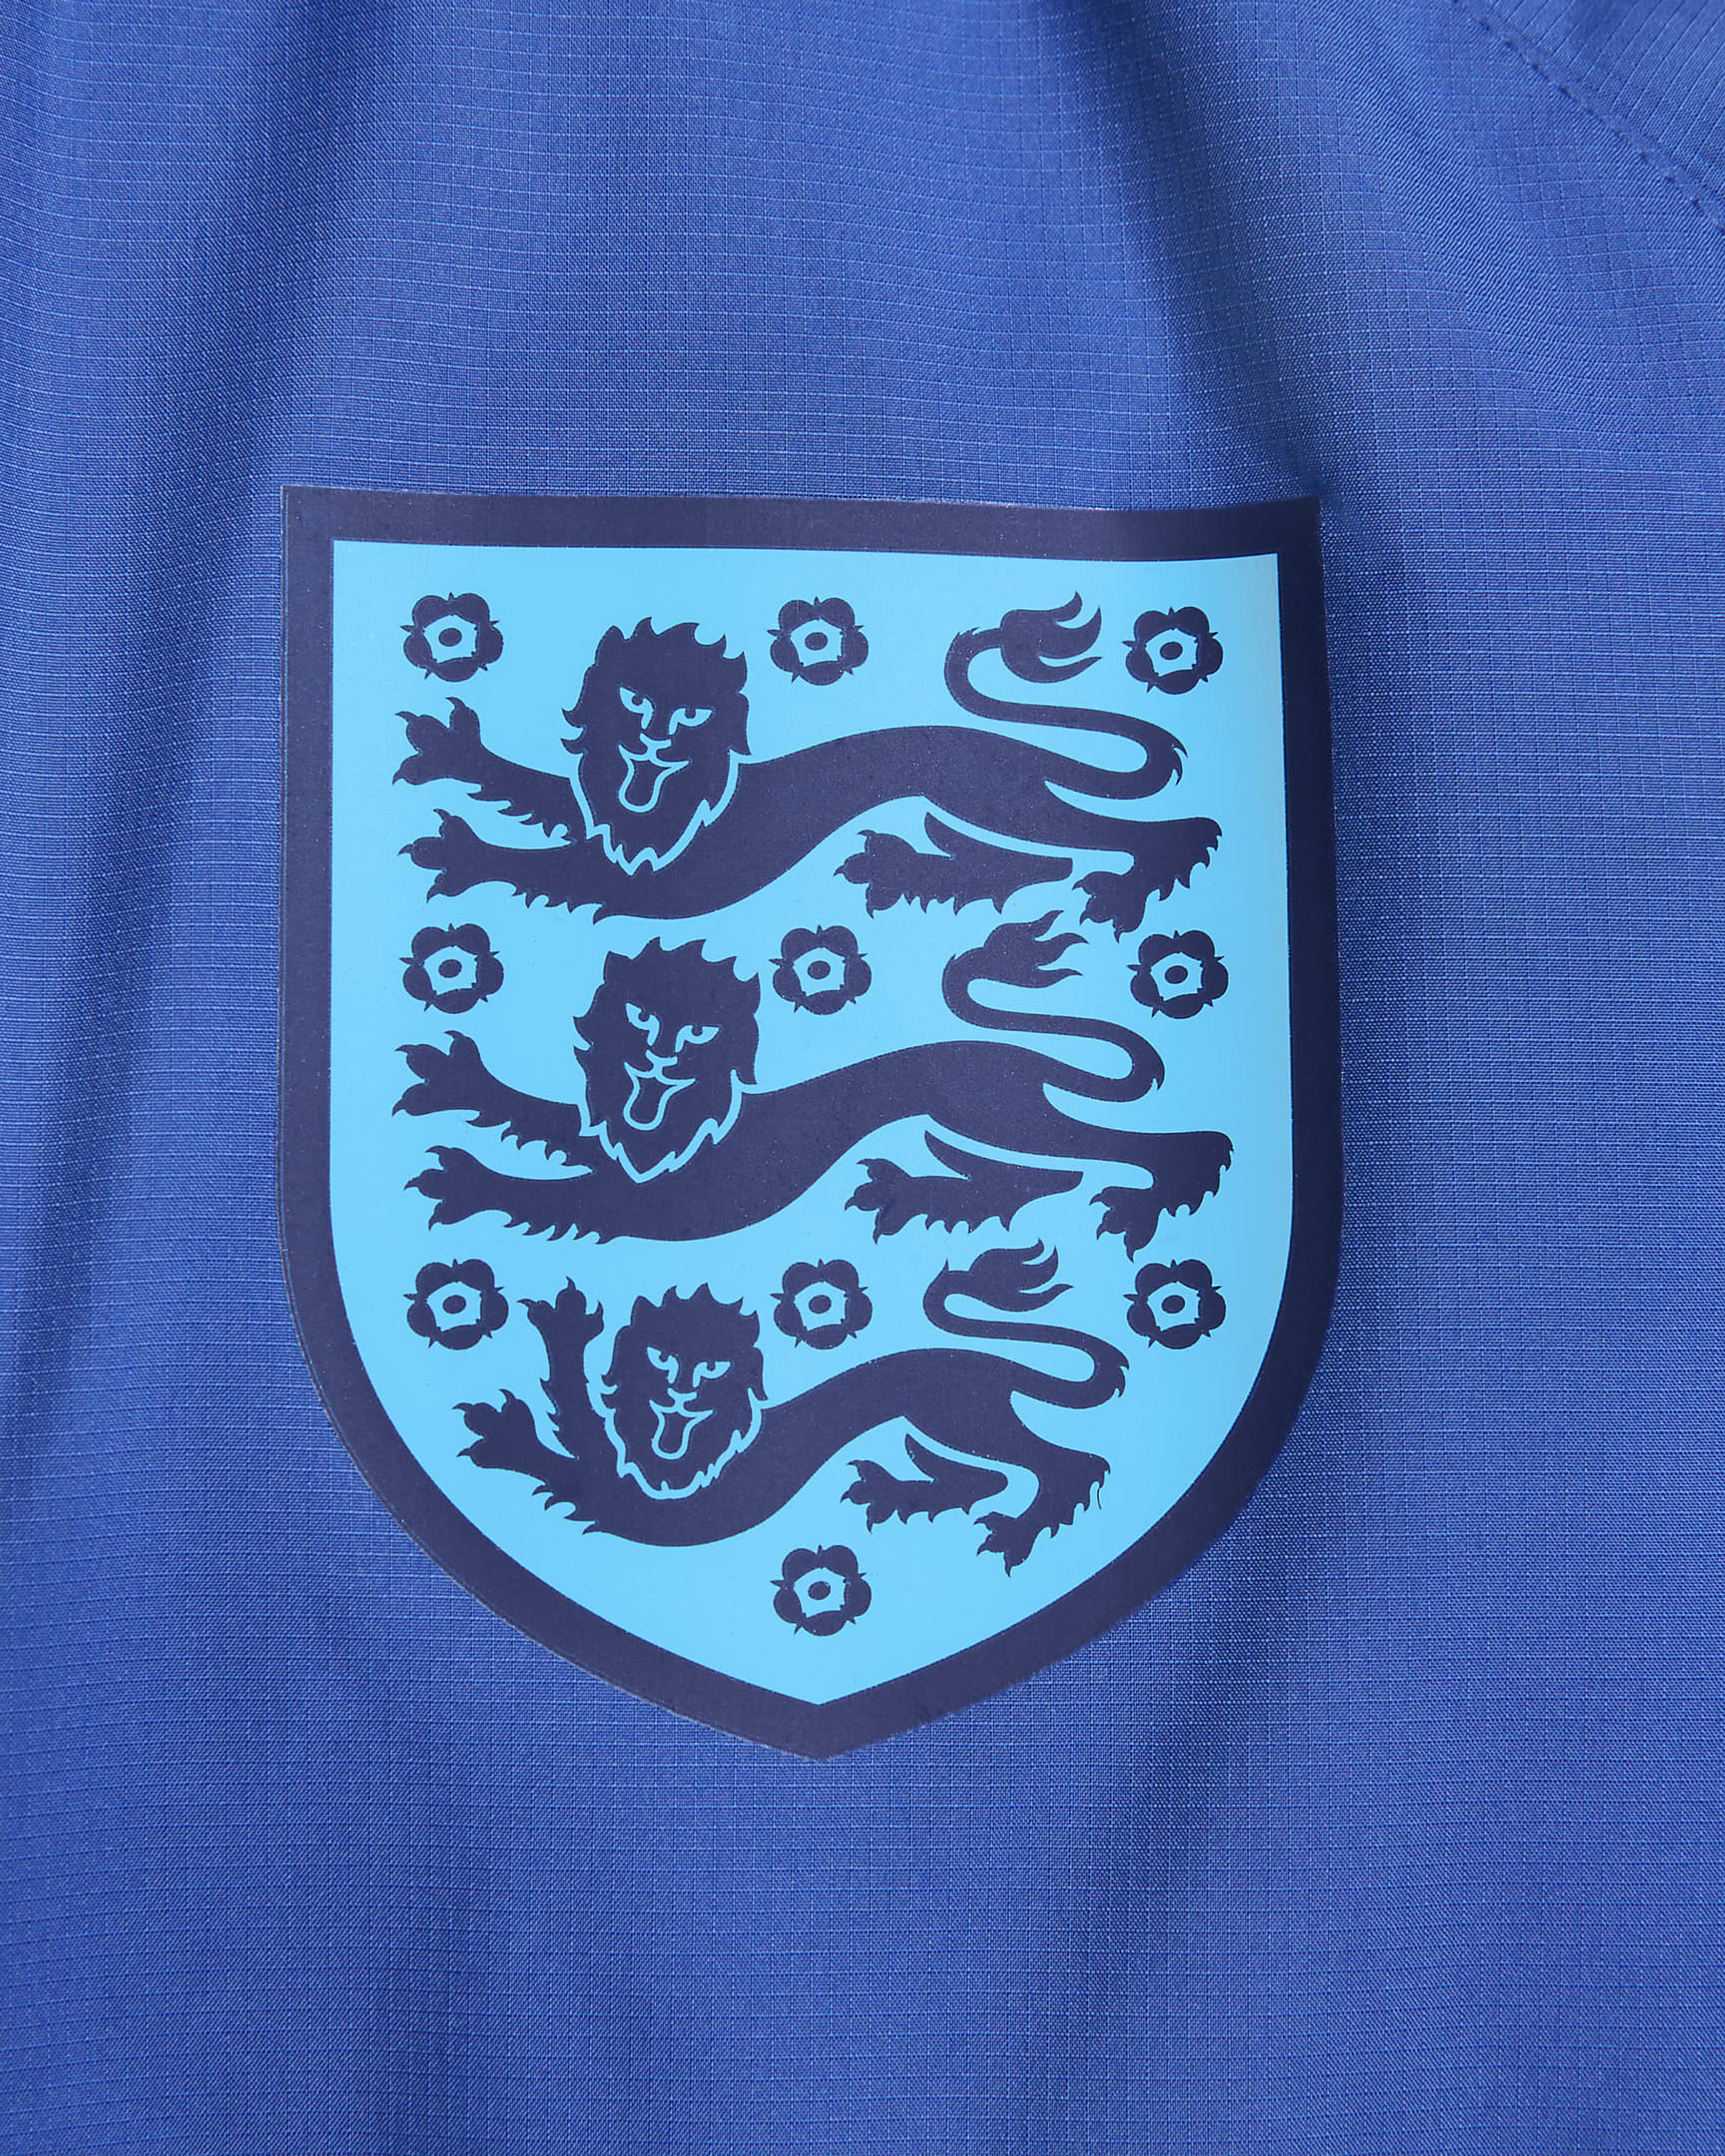 England Strike Men's Nike Dri-FIT Hooded Soccer Jacket. Nike.com